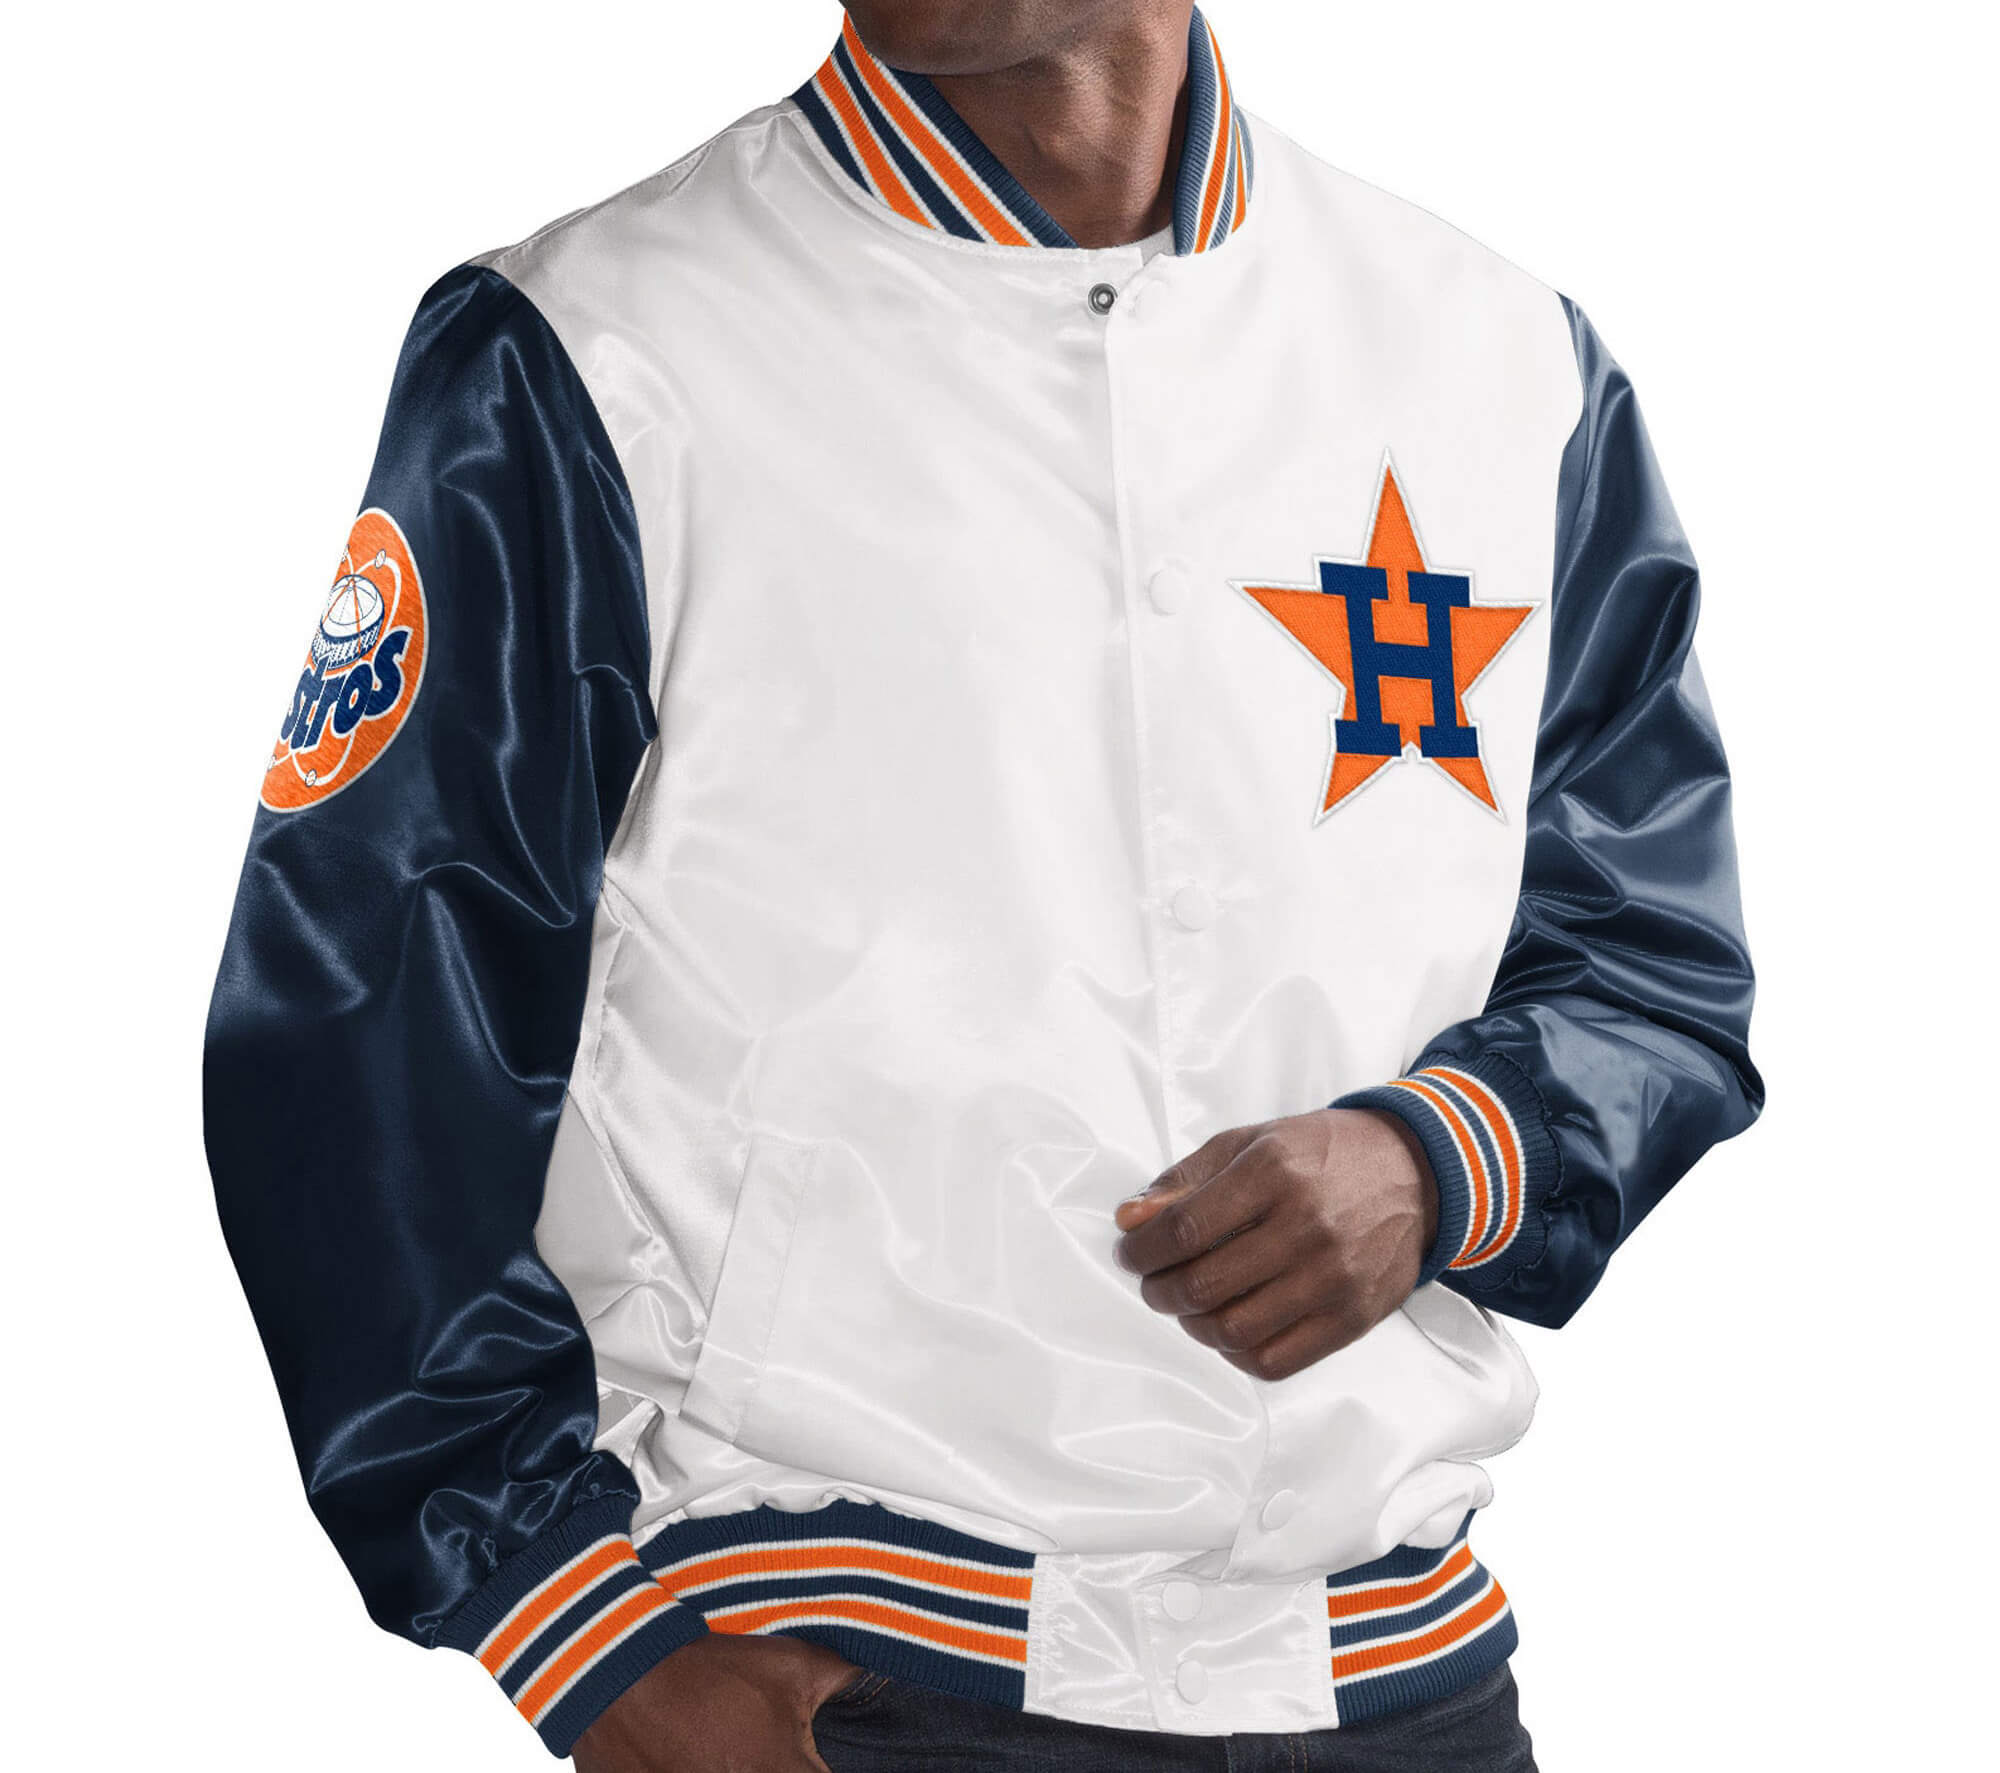 Maker of Jacket Fashion Jackets Houston Astros White The Legend Satin